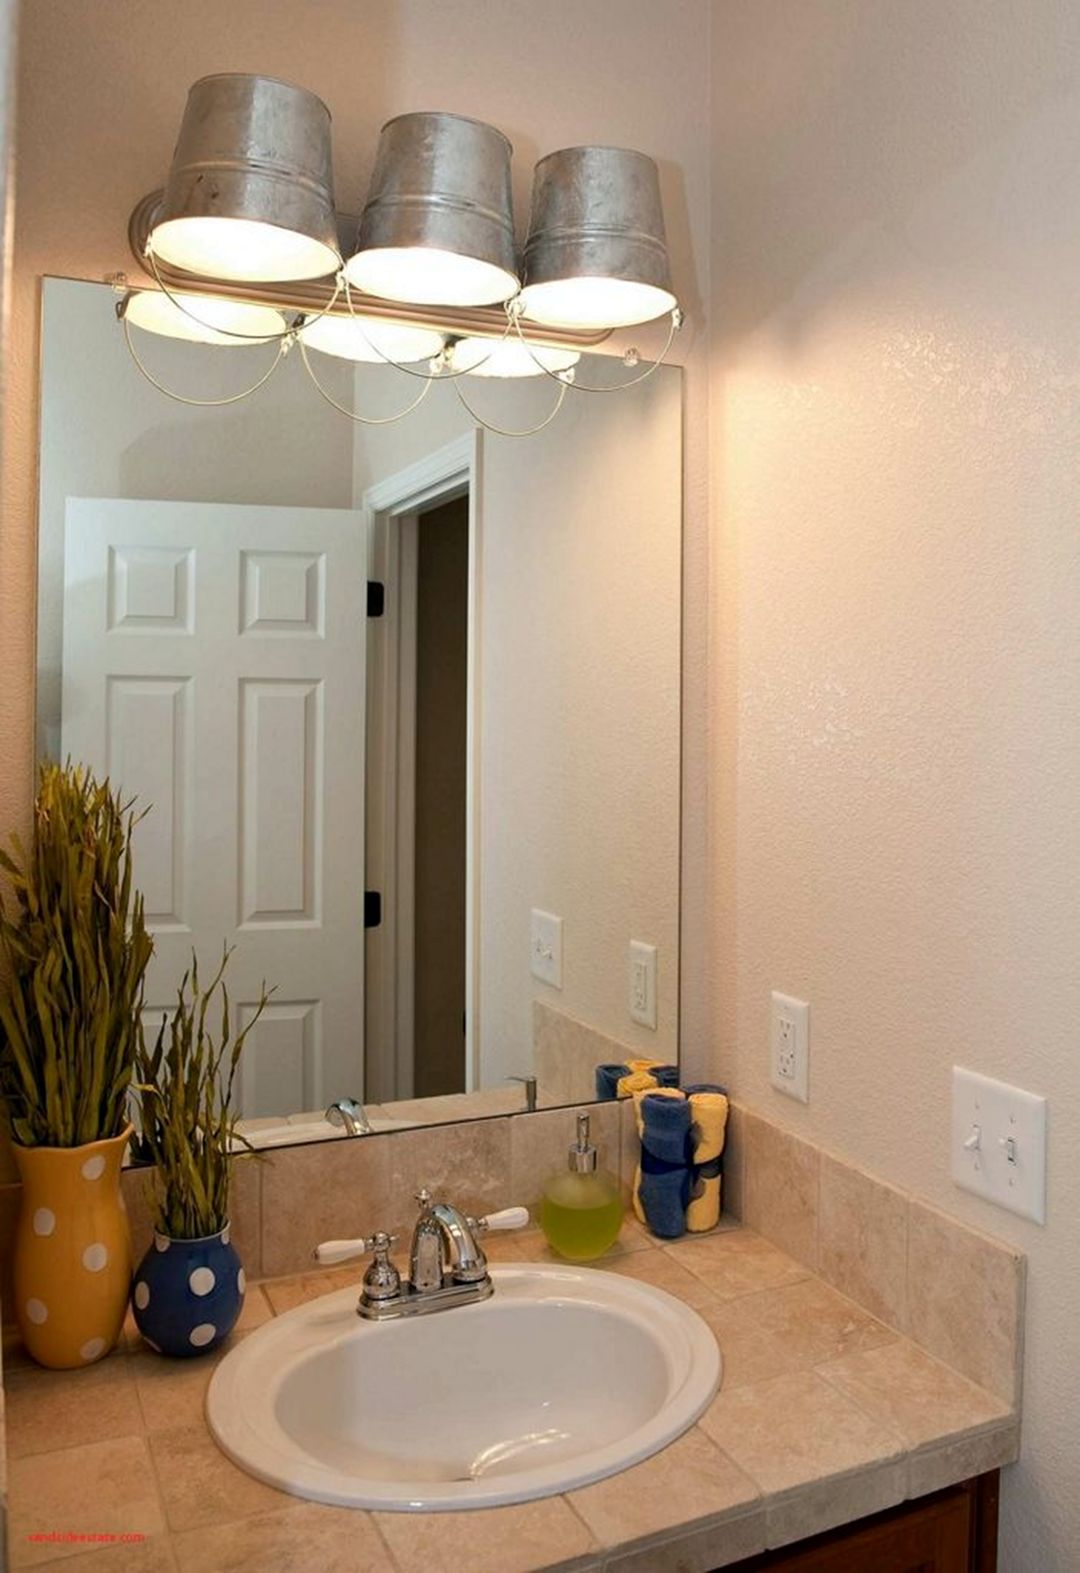 DIY Bathroom Light Ideas